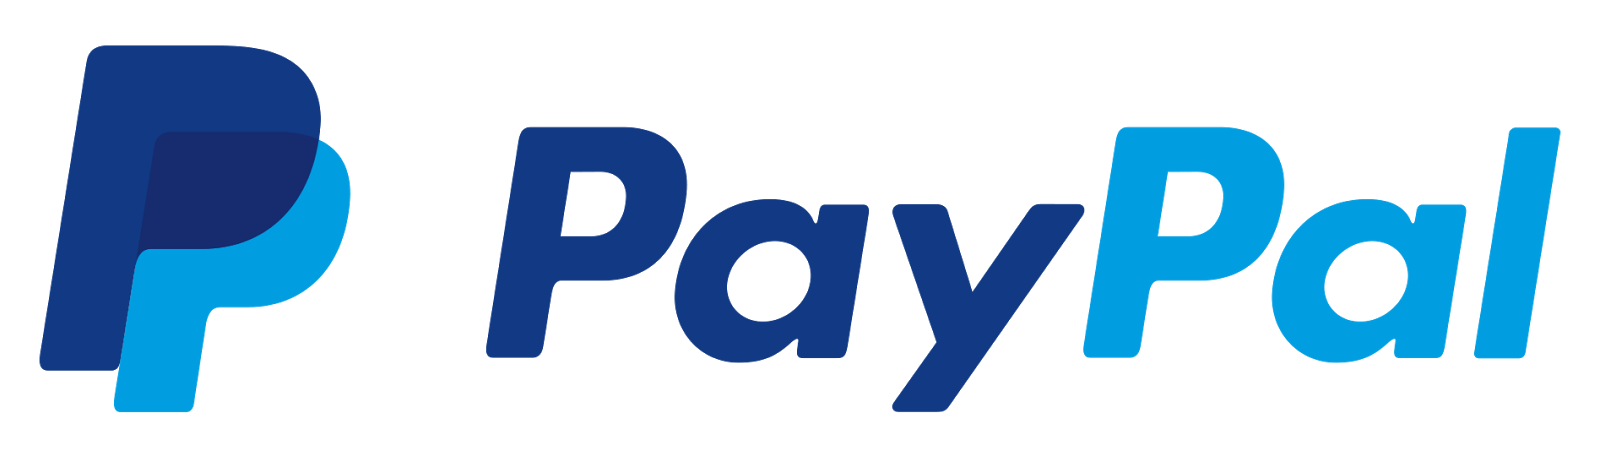 Paypal Image